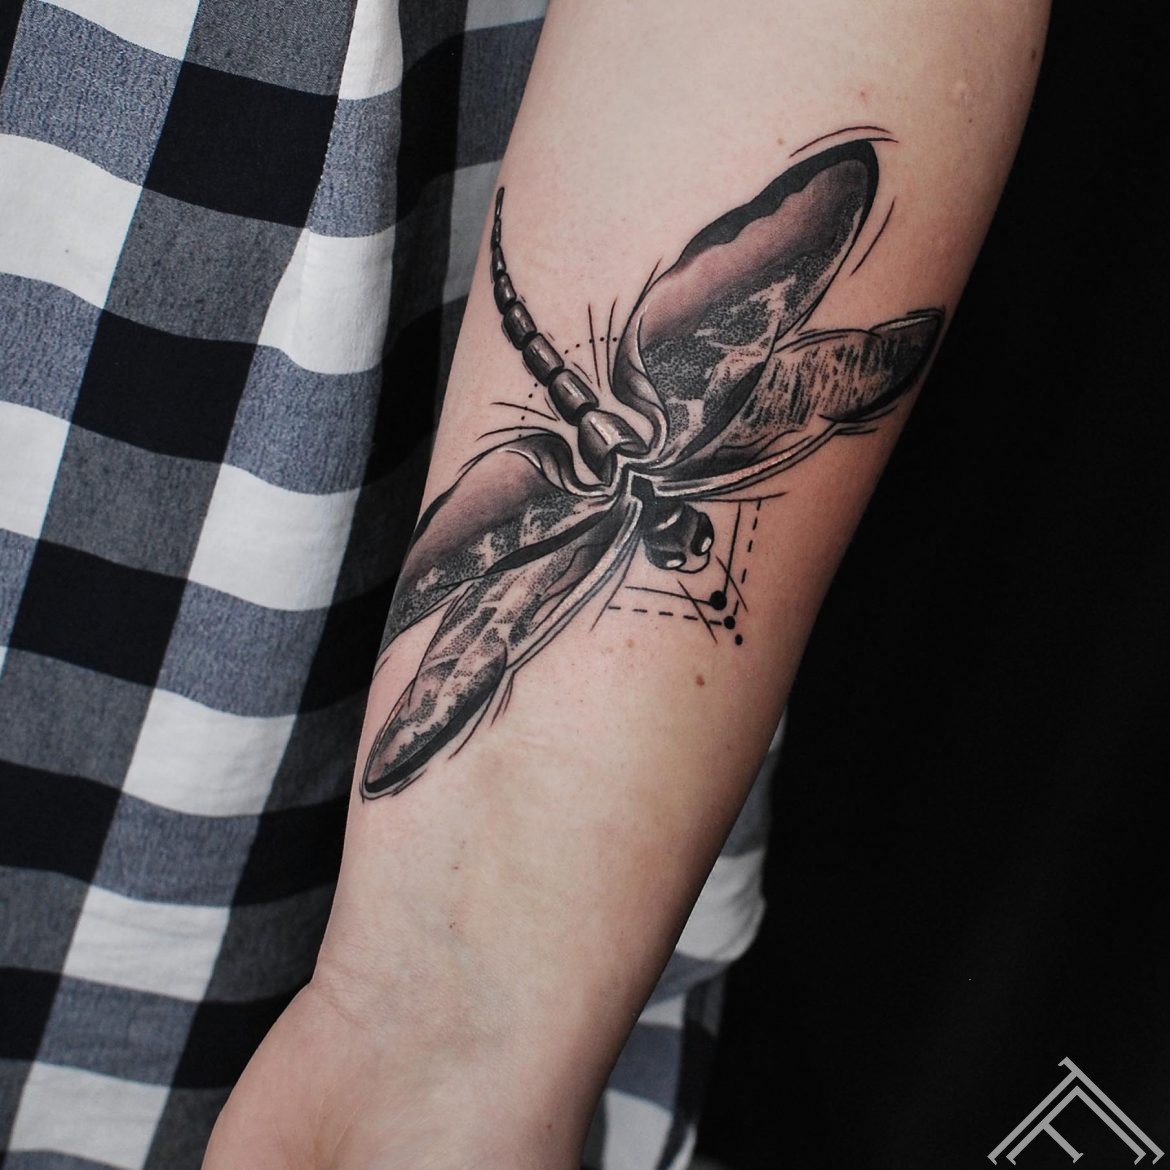 martinssilins-tattoo-tetovejums-spare-draguonfly-tattoofrequency-riga-m.lapa